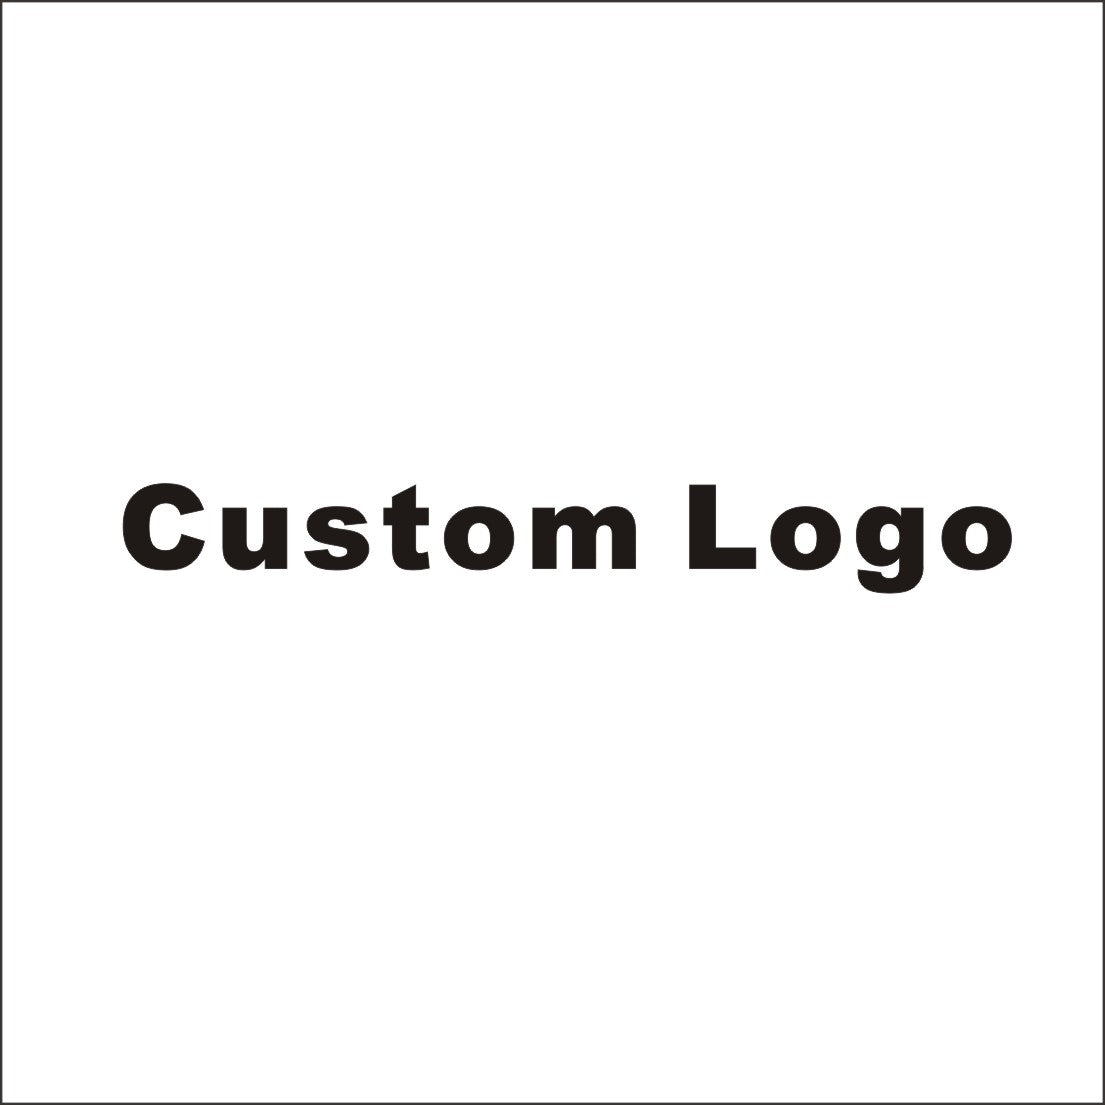 Custom Logo dial